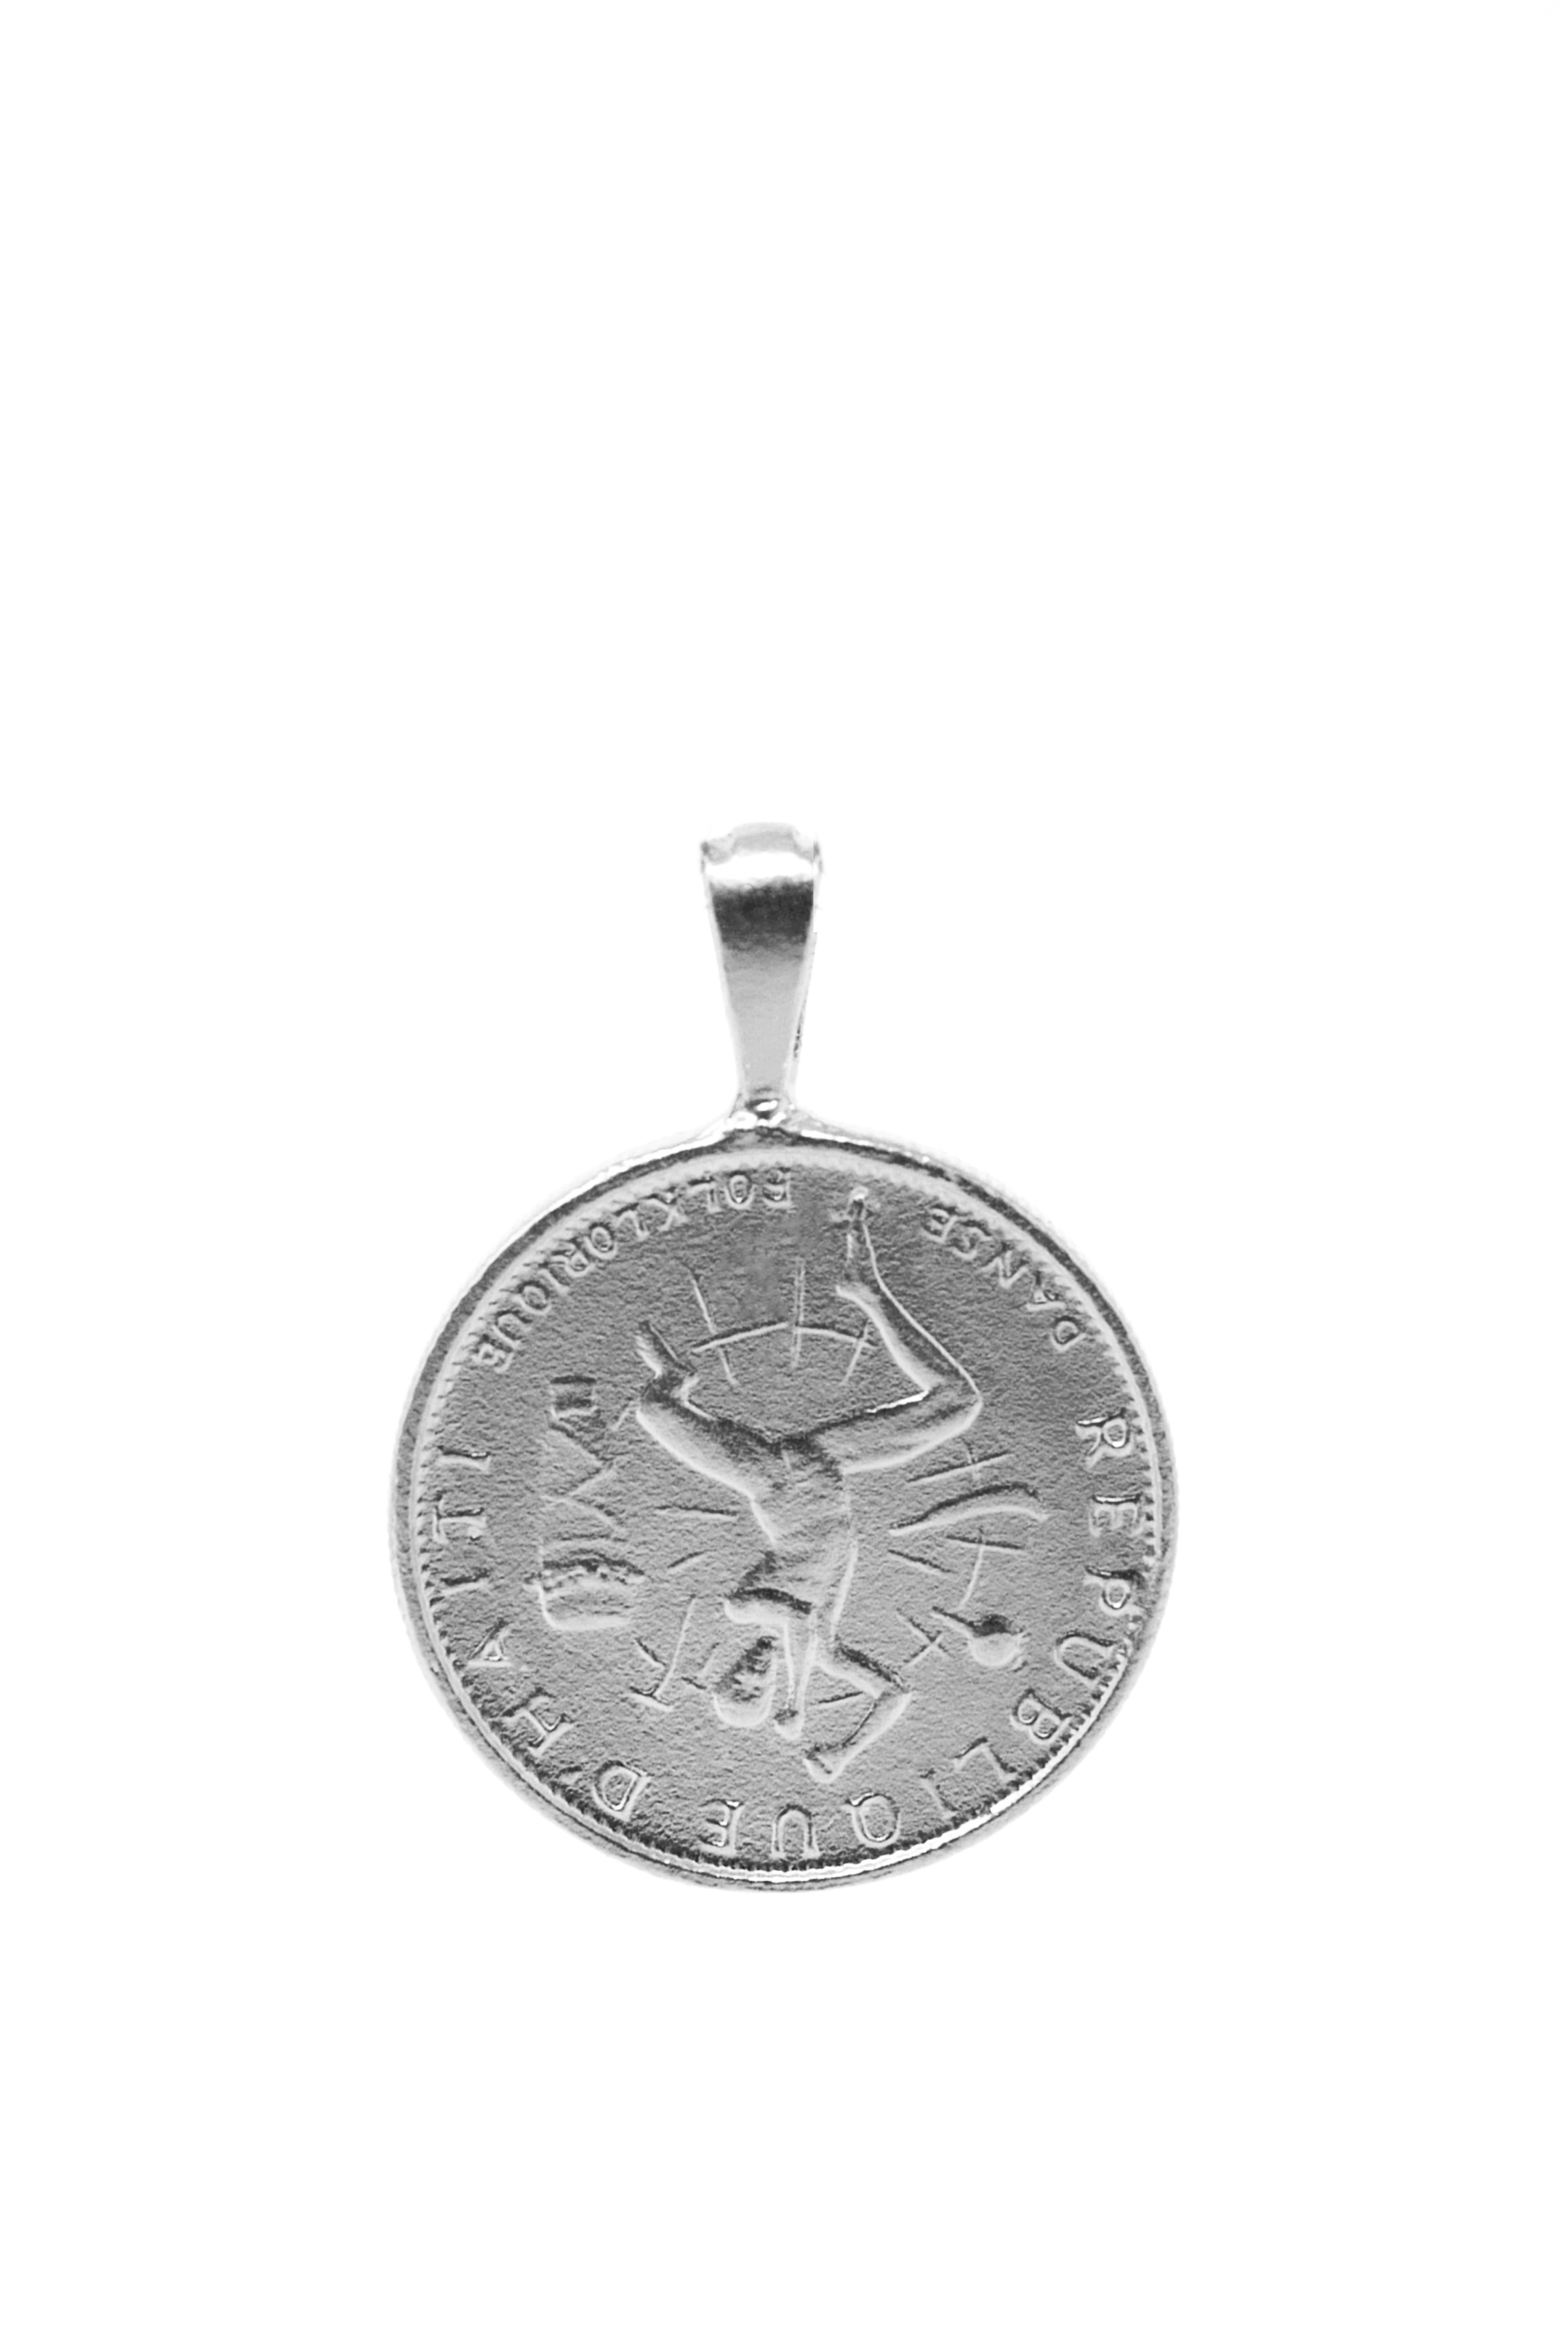 THE HAITI Liberte Coin Pendant